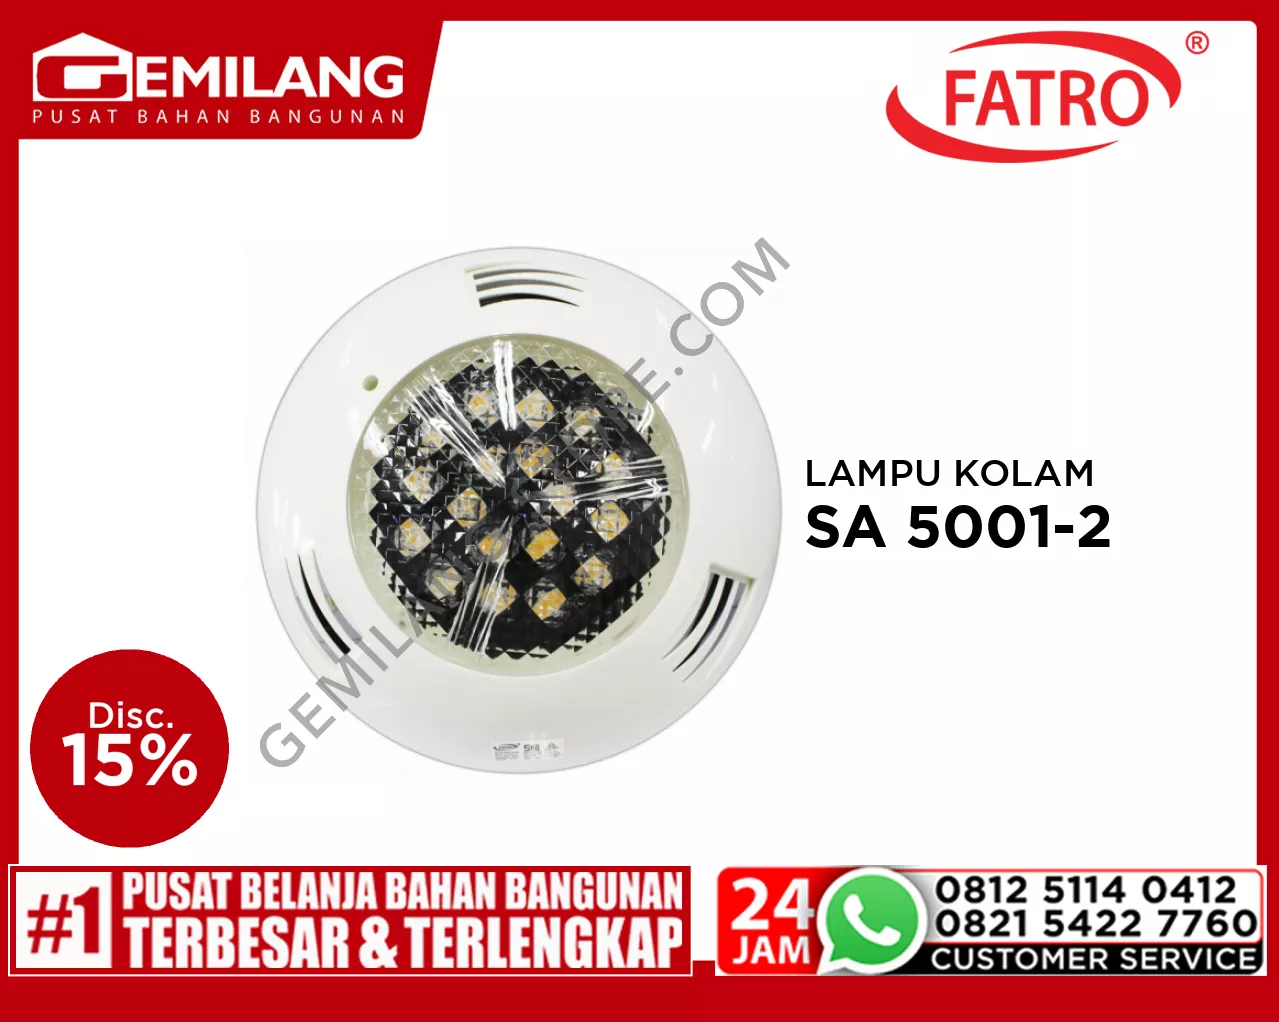 FATRO LAMPU KOLAM SA 5001-2 W.WH 12w/12v